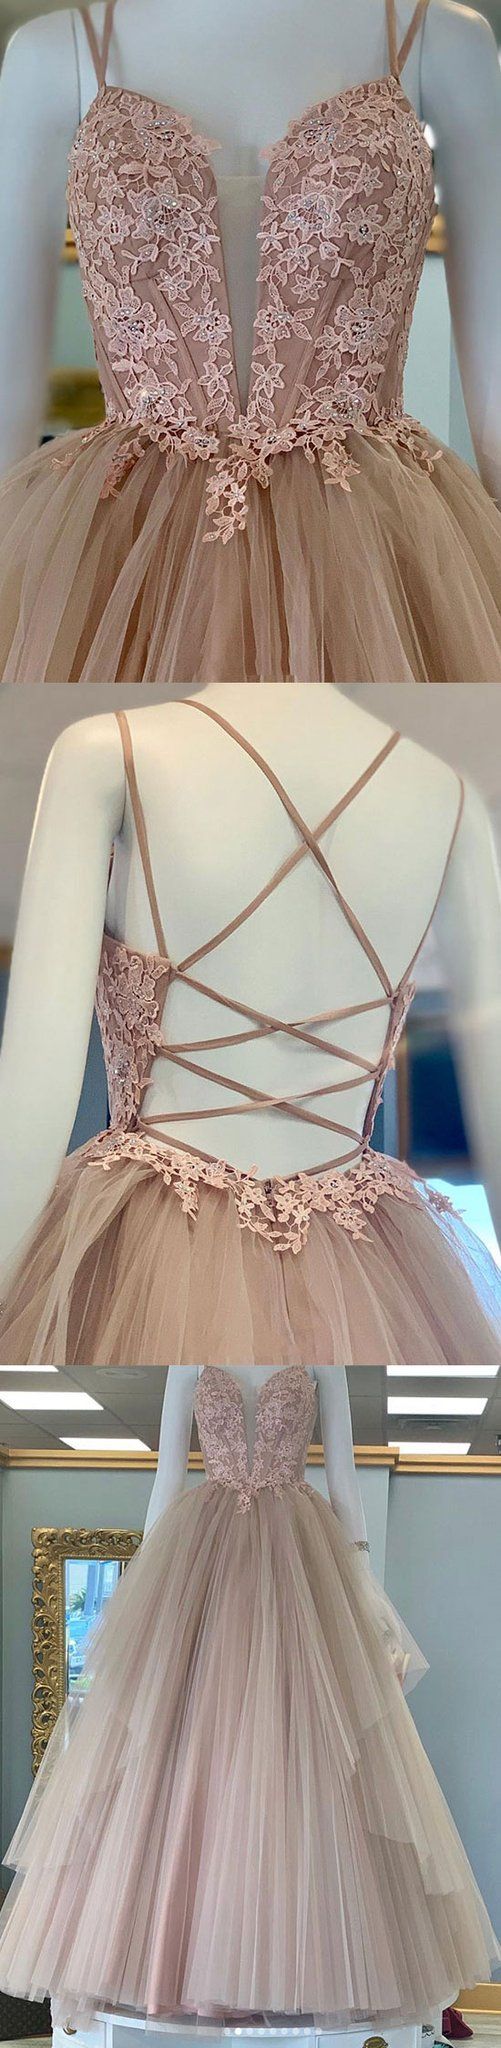 Stylish Sweetheart Neck Tulle Lace Long Prom Dress, Evening Dress M7080